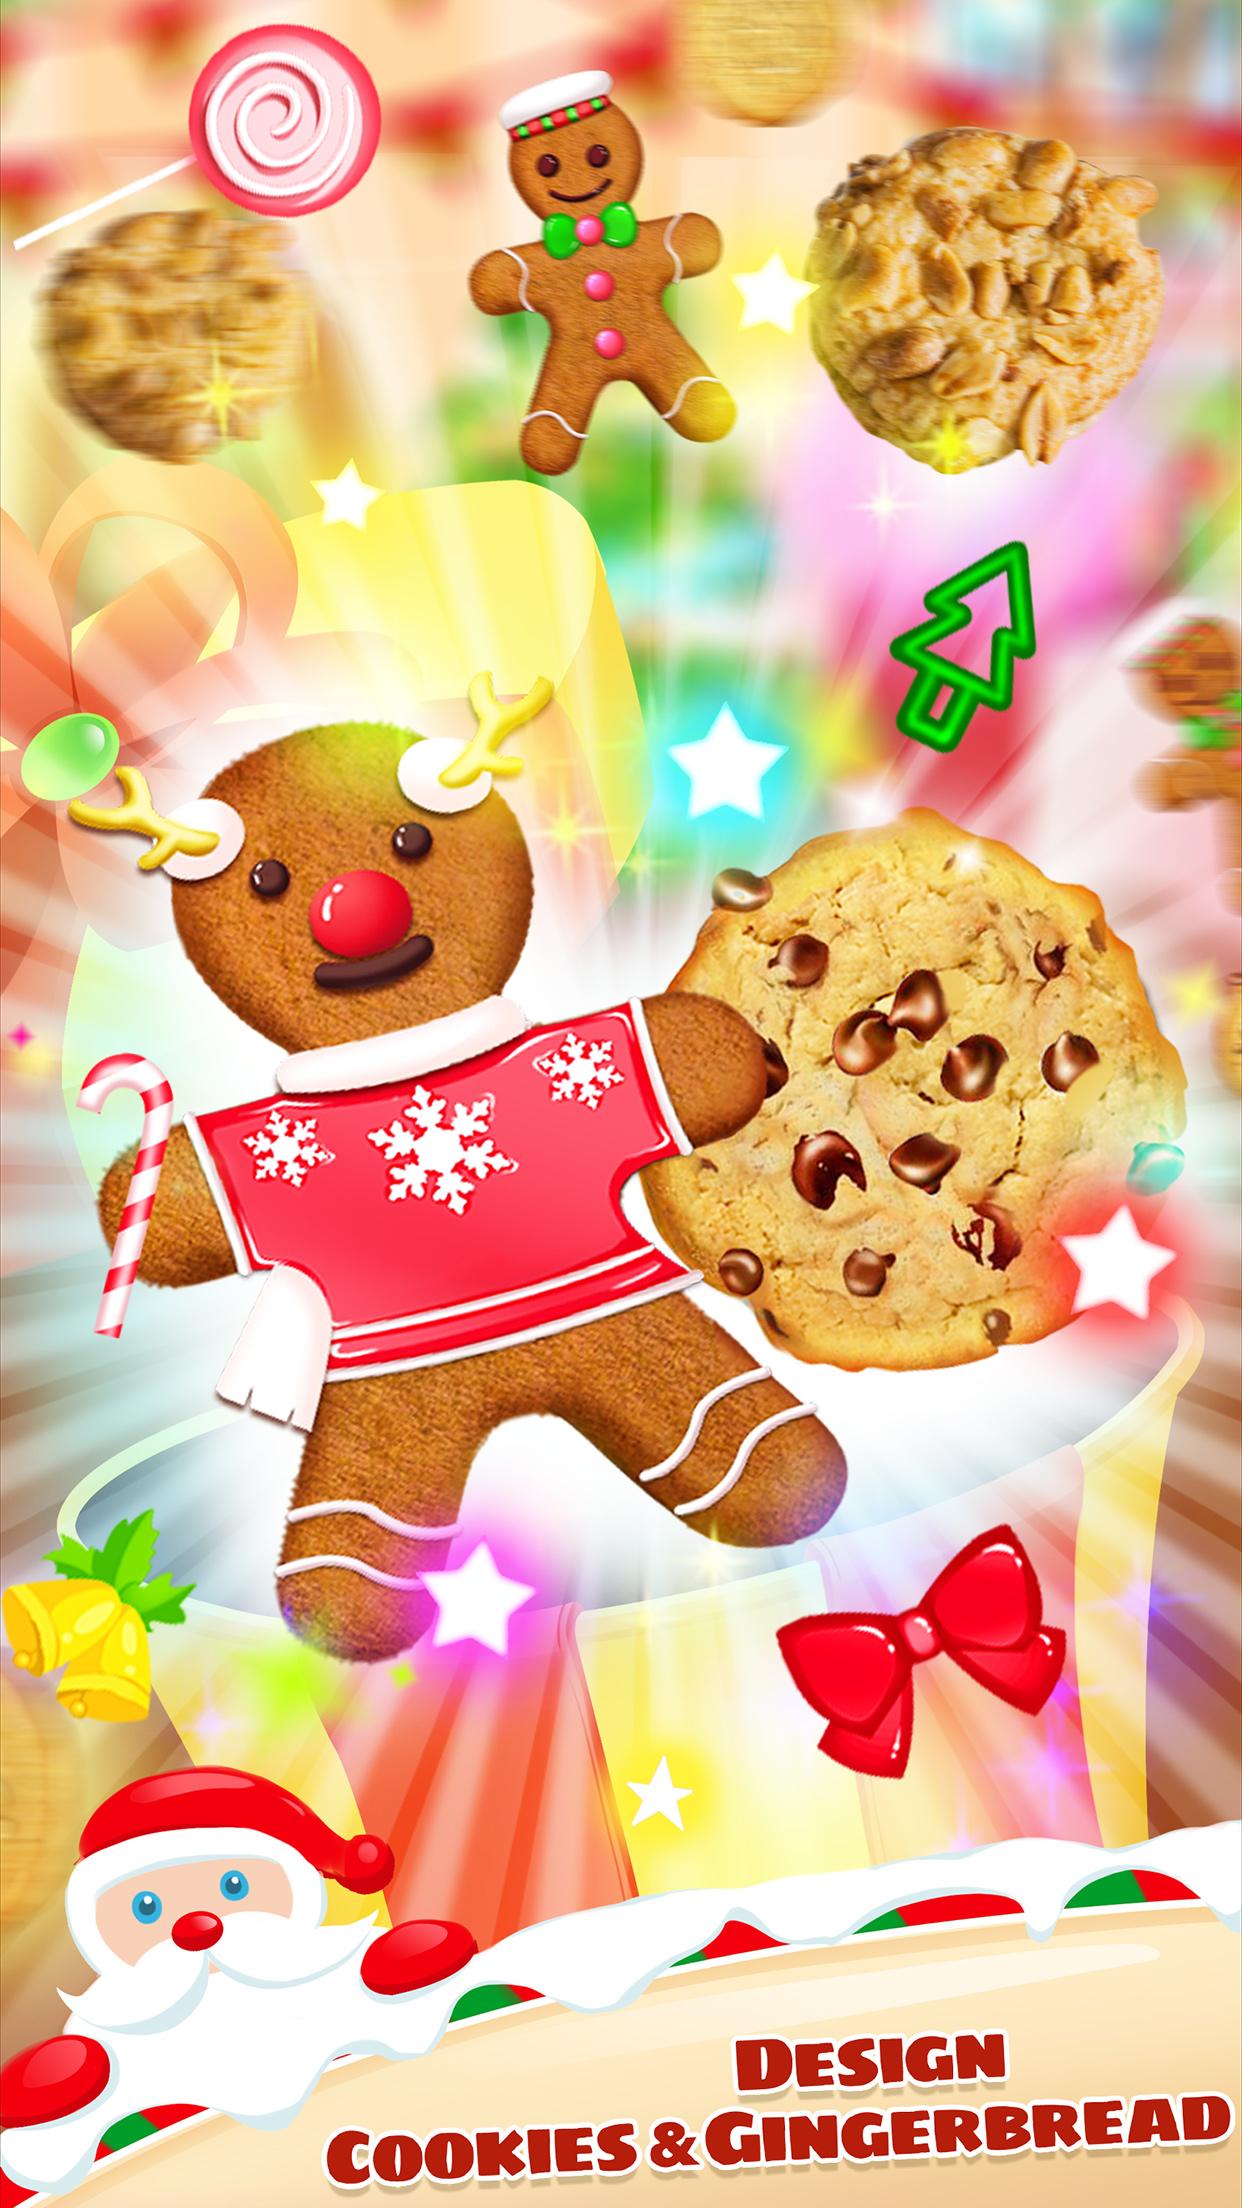 Christmas Cookies Party - Sweet Desserts 1.0 Screenshot 4